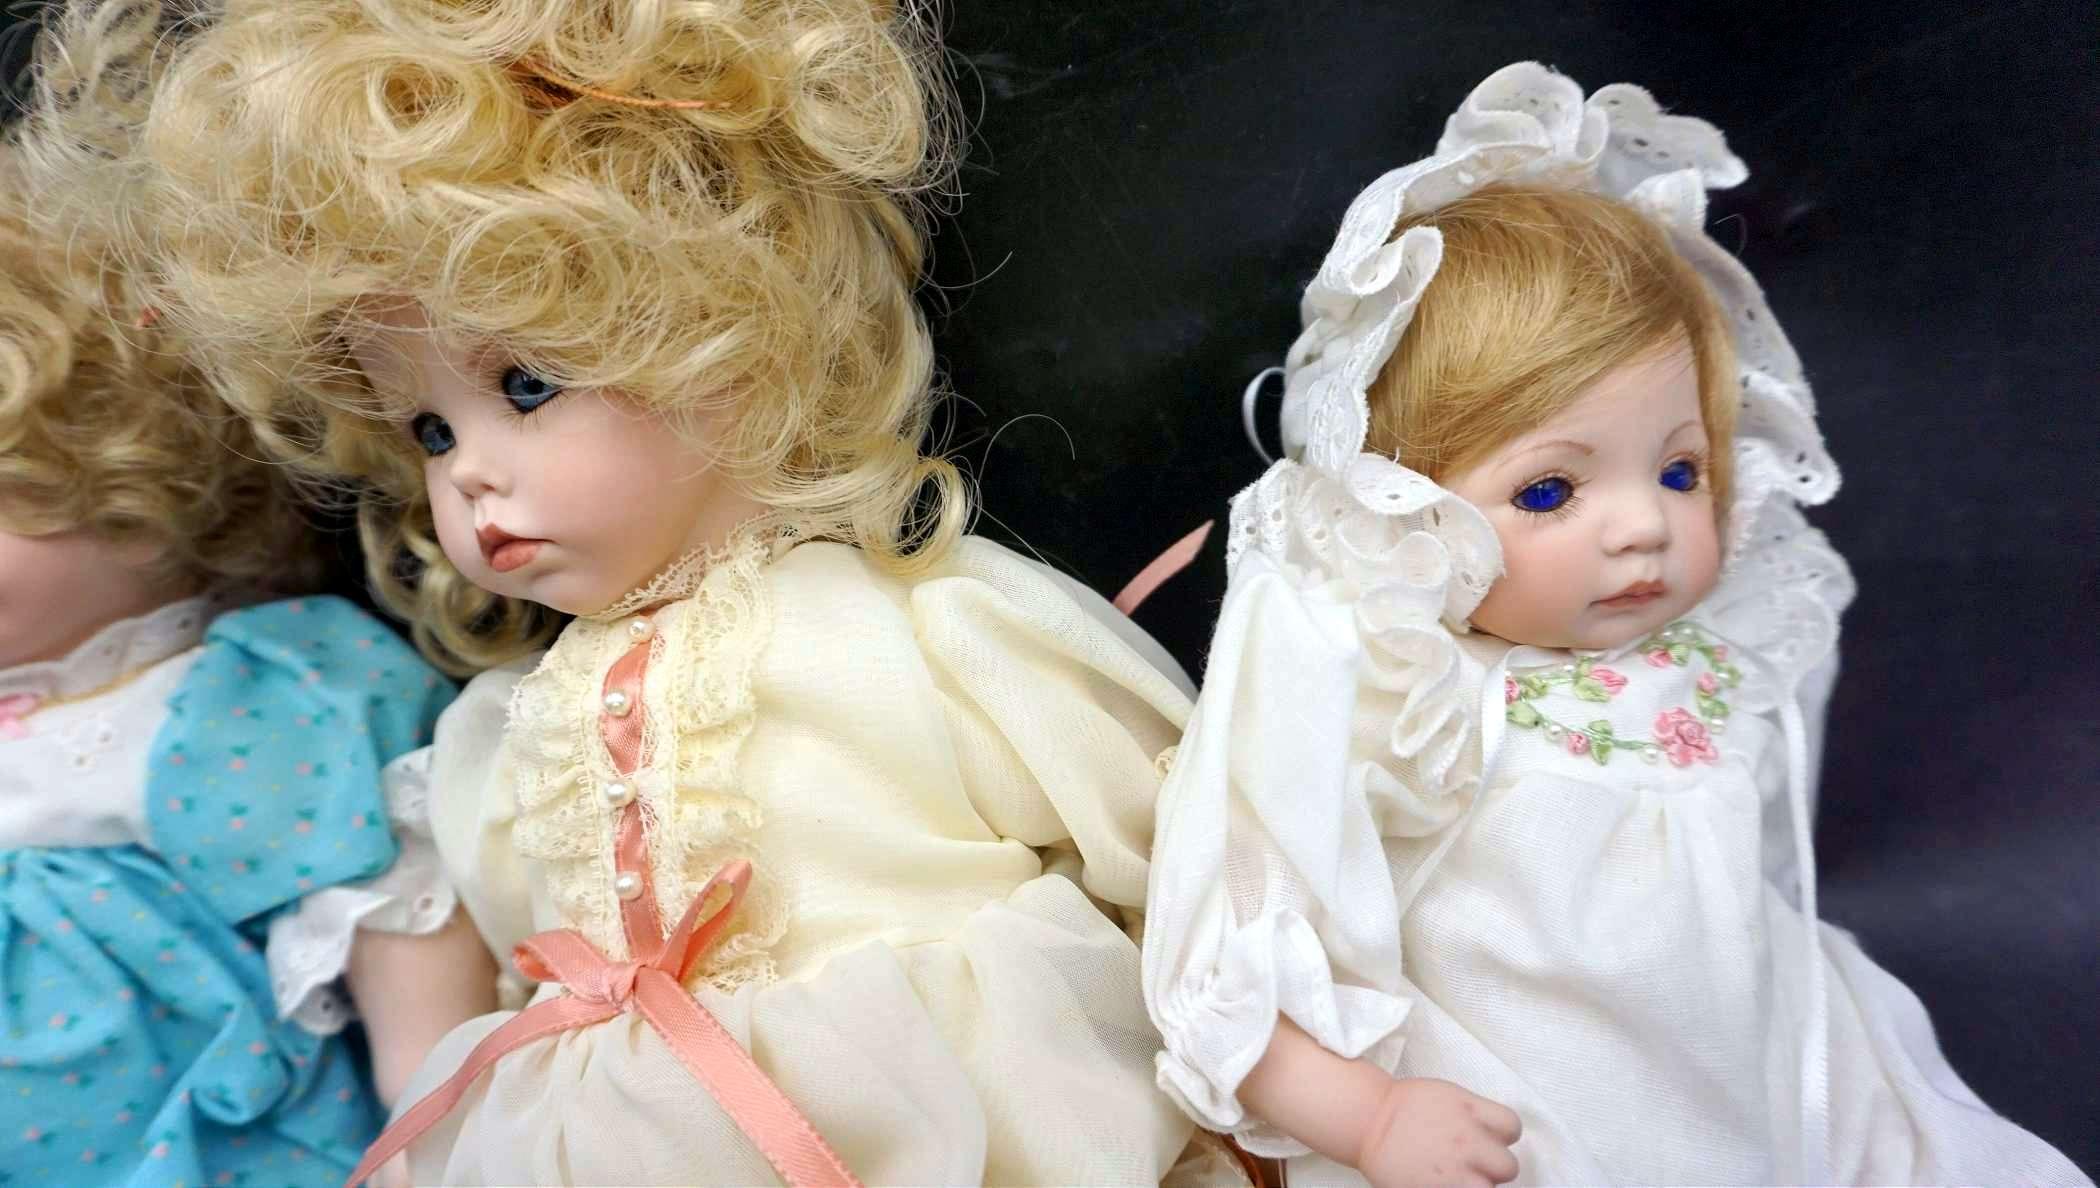 3 - Dolls